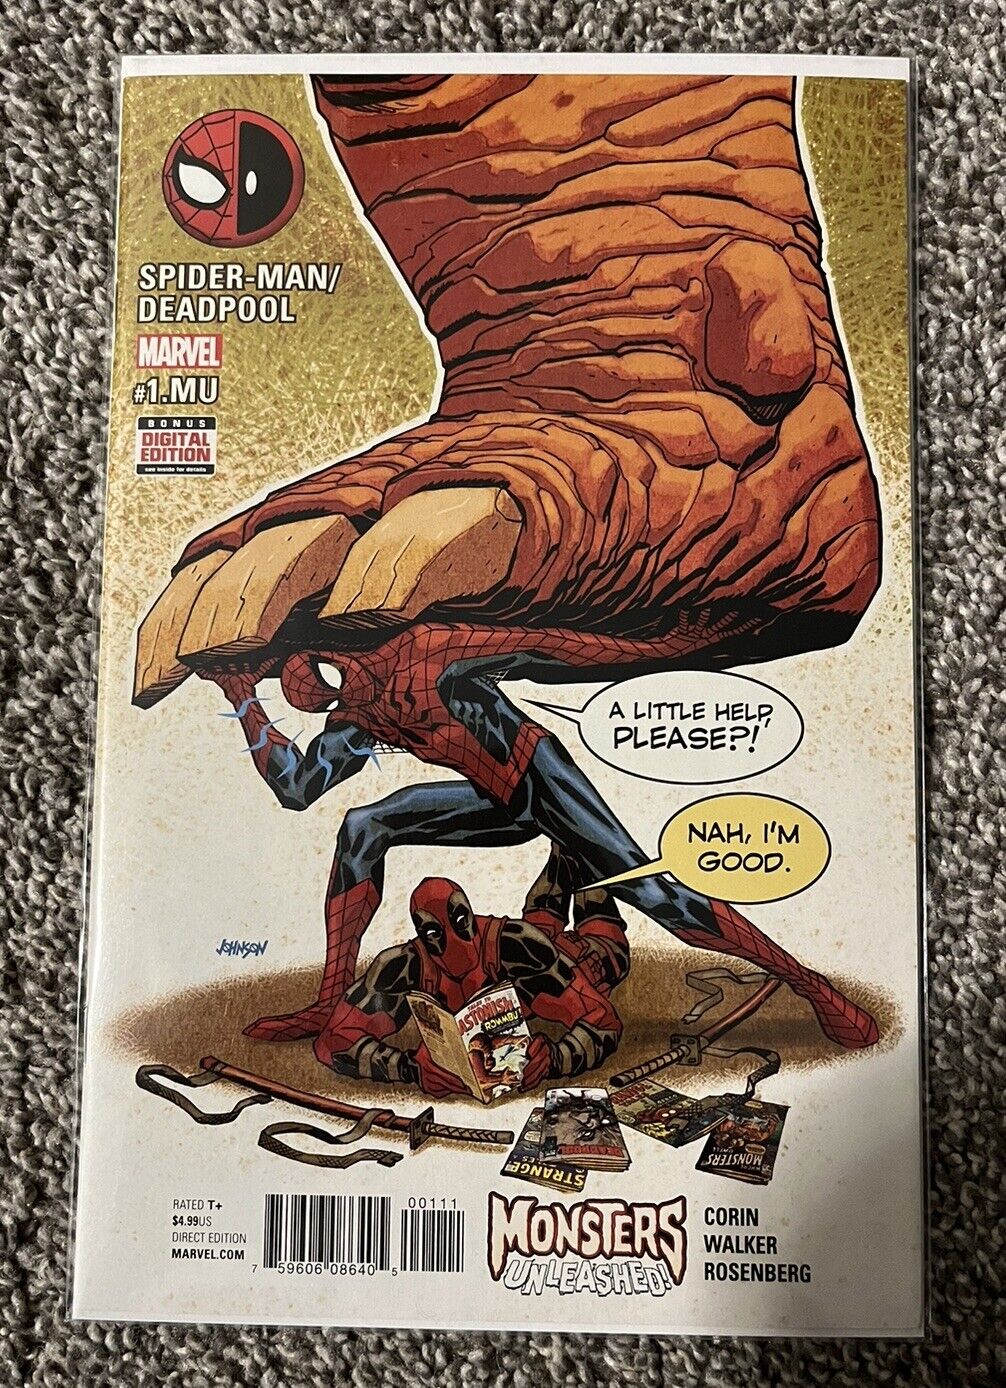 Marvel Comics Spider-Man/Deadpool #1.MU (2017) Monsters Unleashed 1st Printing